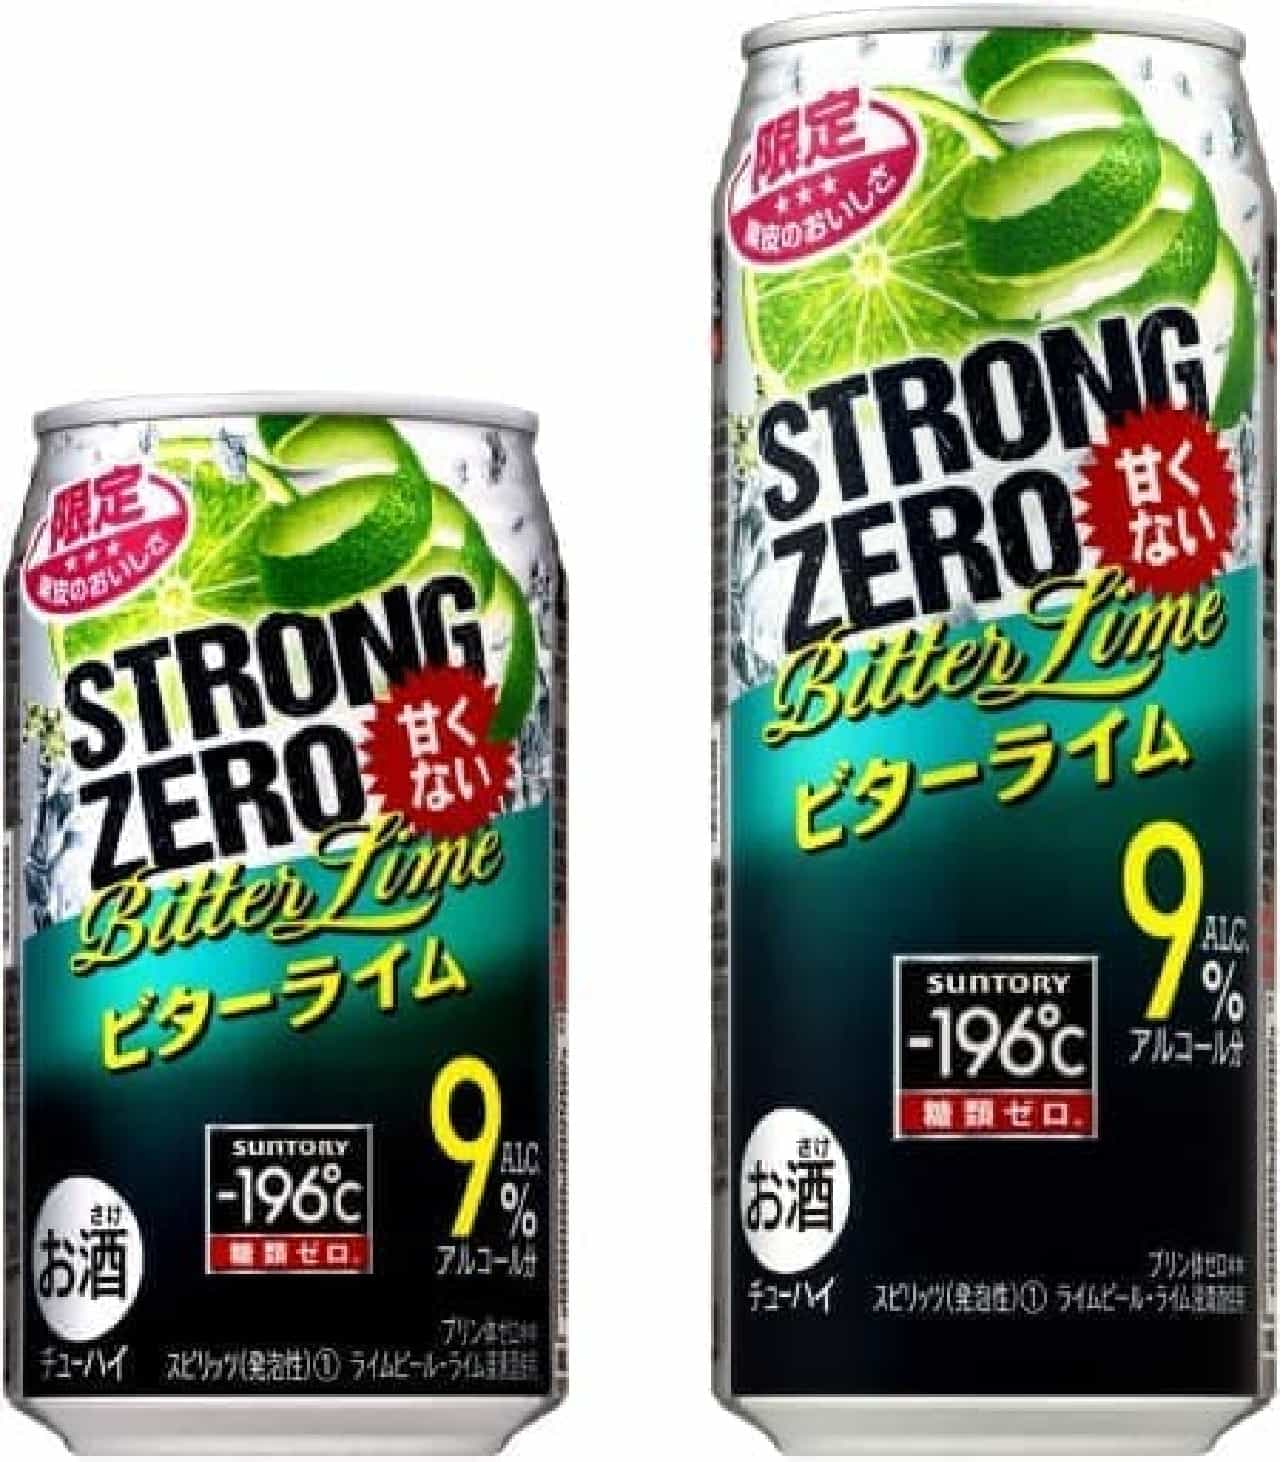 Suntory Chuhai "-196 ℃ Strong Zero [Bitter Lime]"